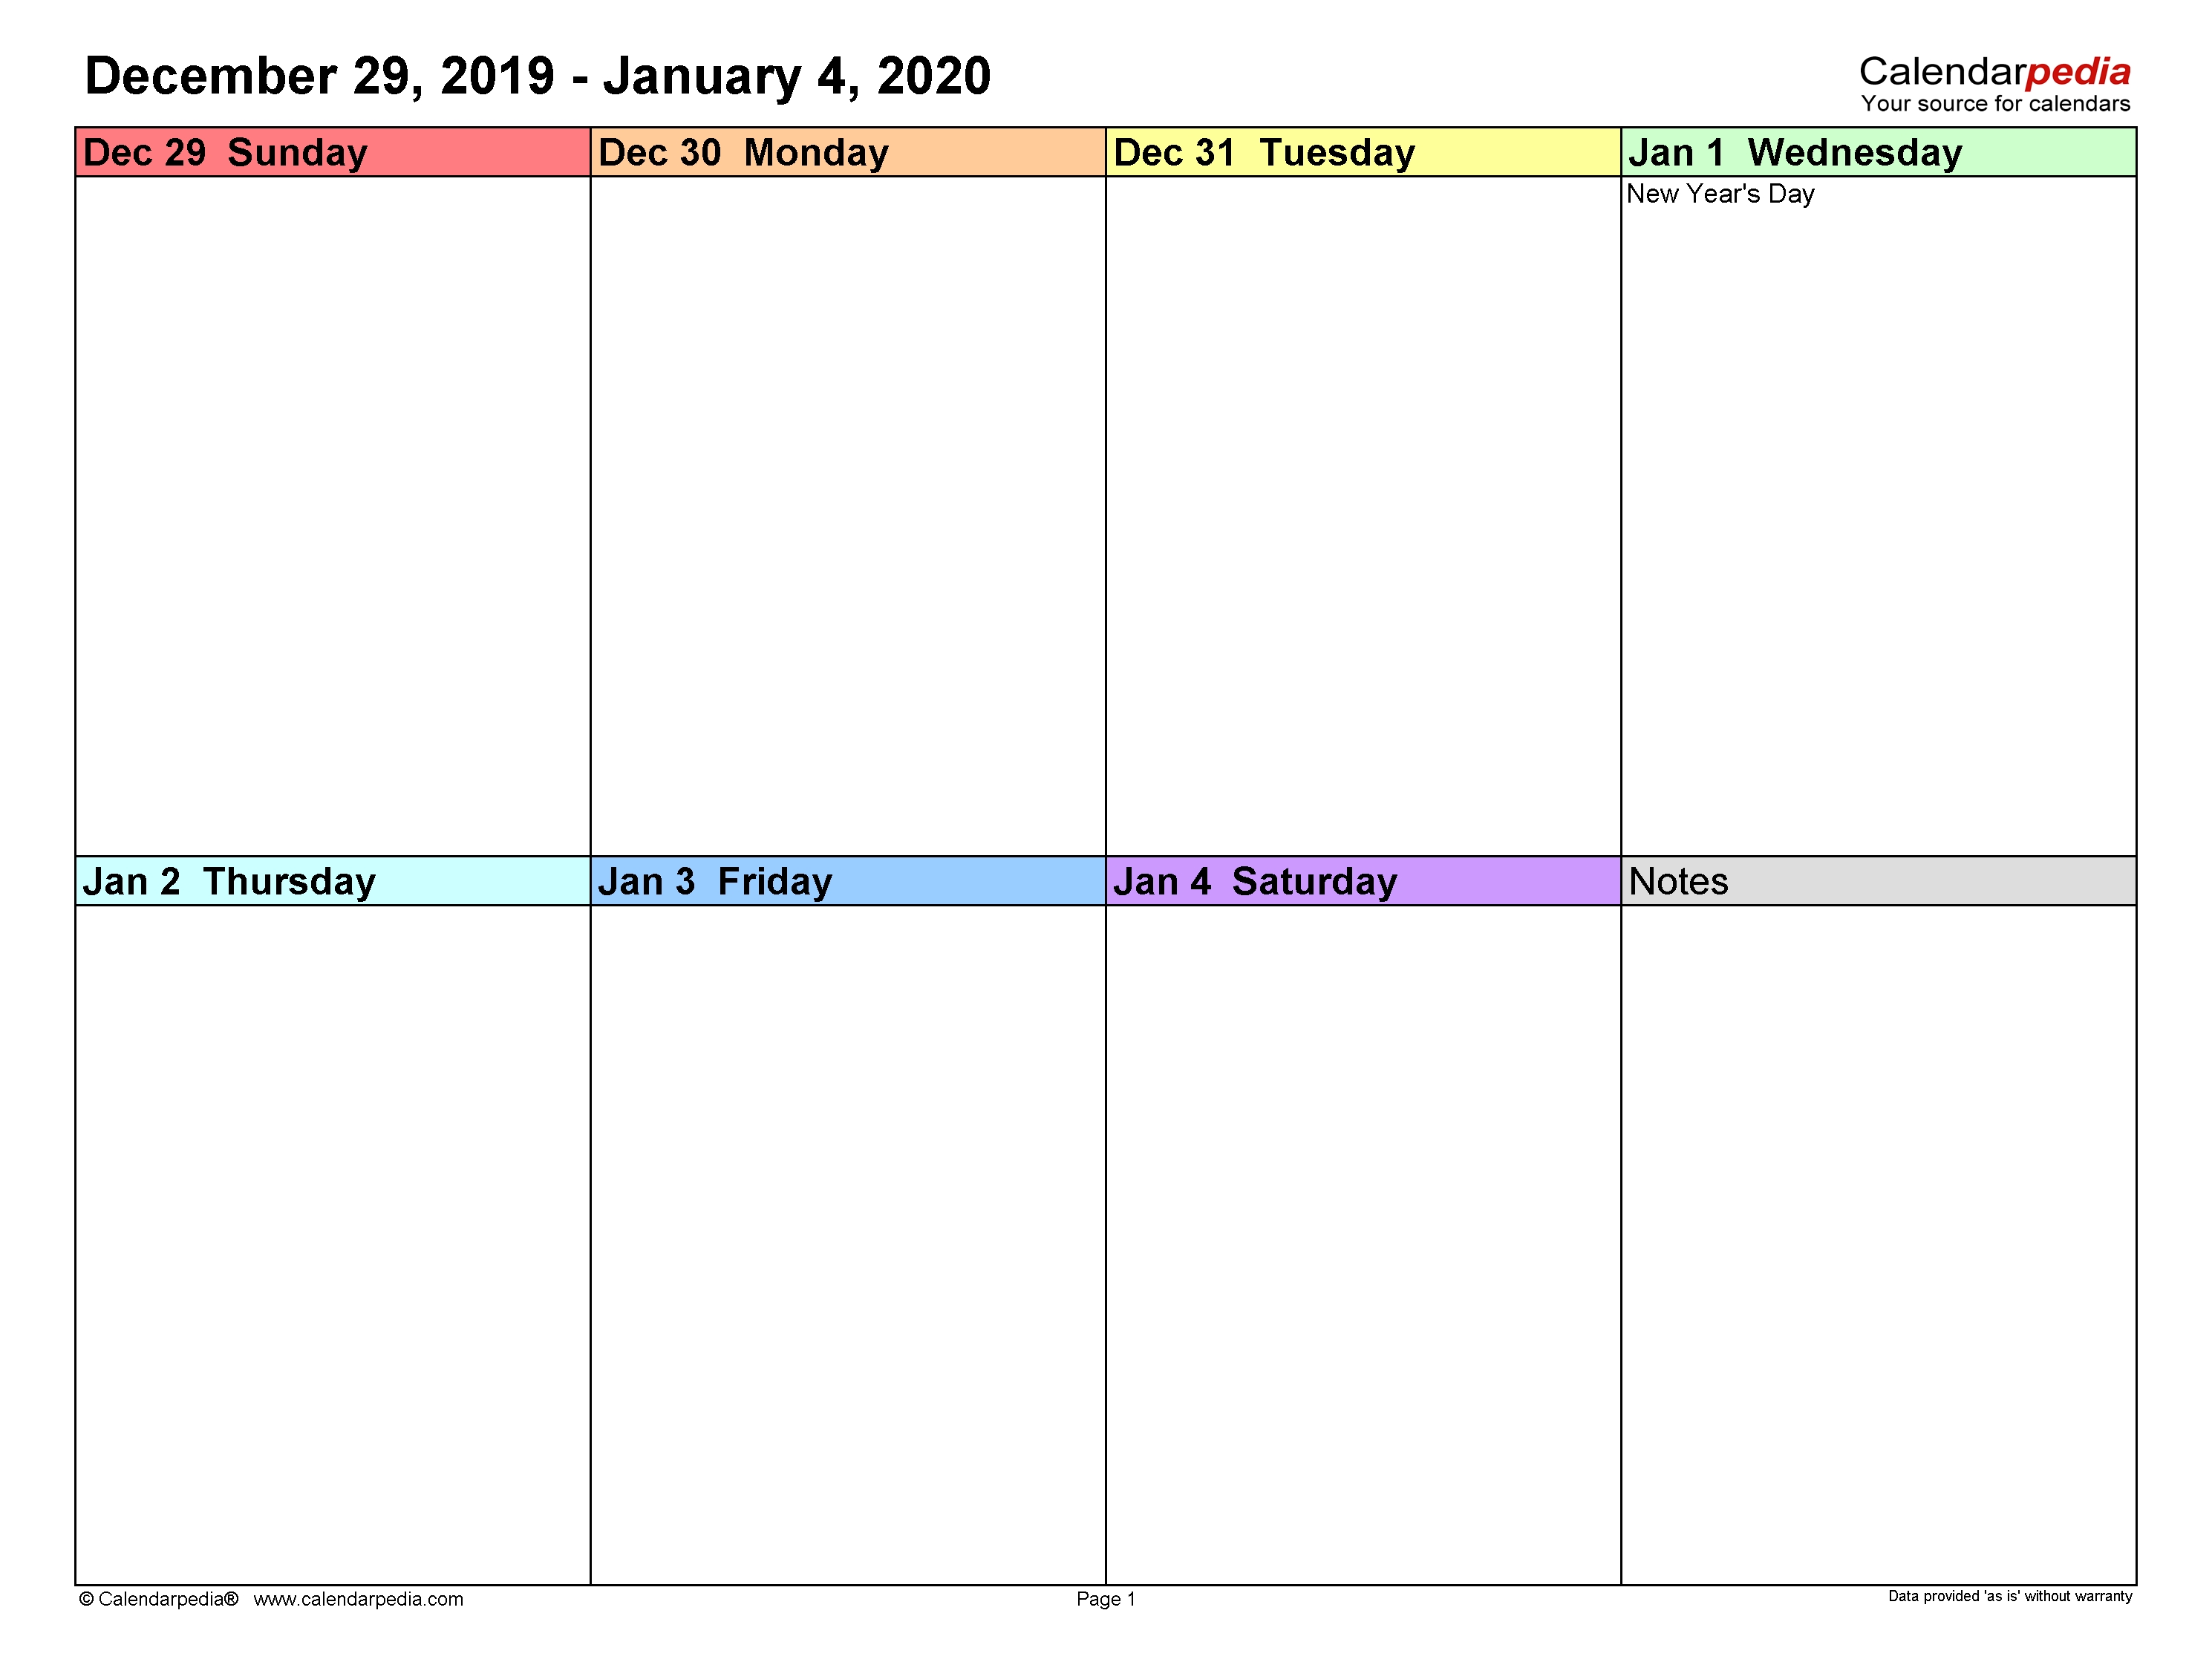 Weekly Calendars 2020 For Word - 12 Free Printable Templates 2 Week Calendar Template Free